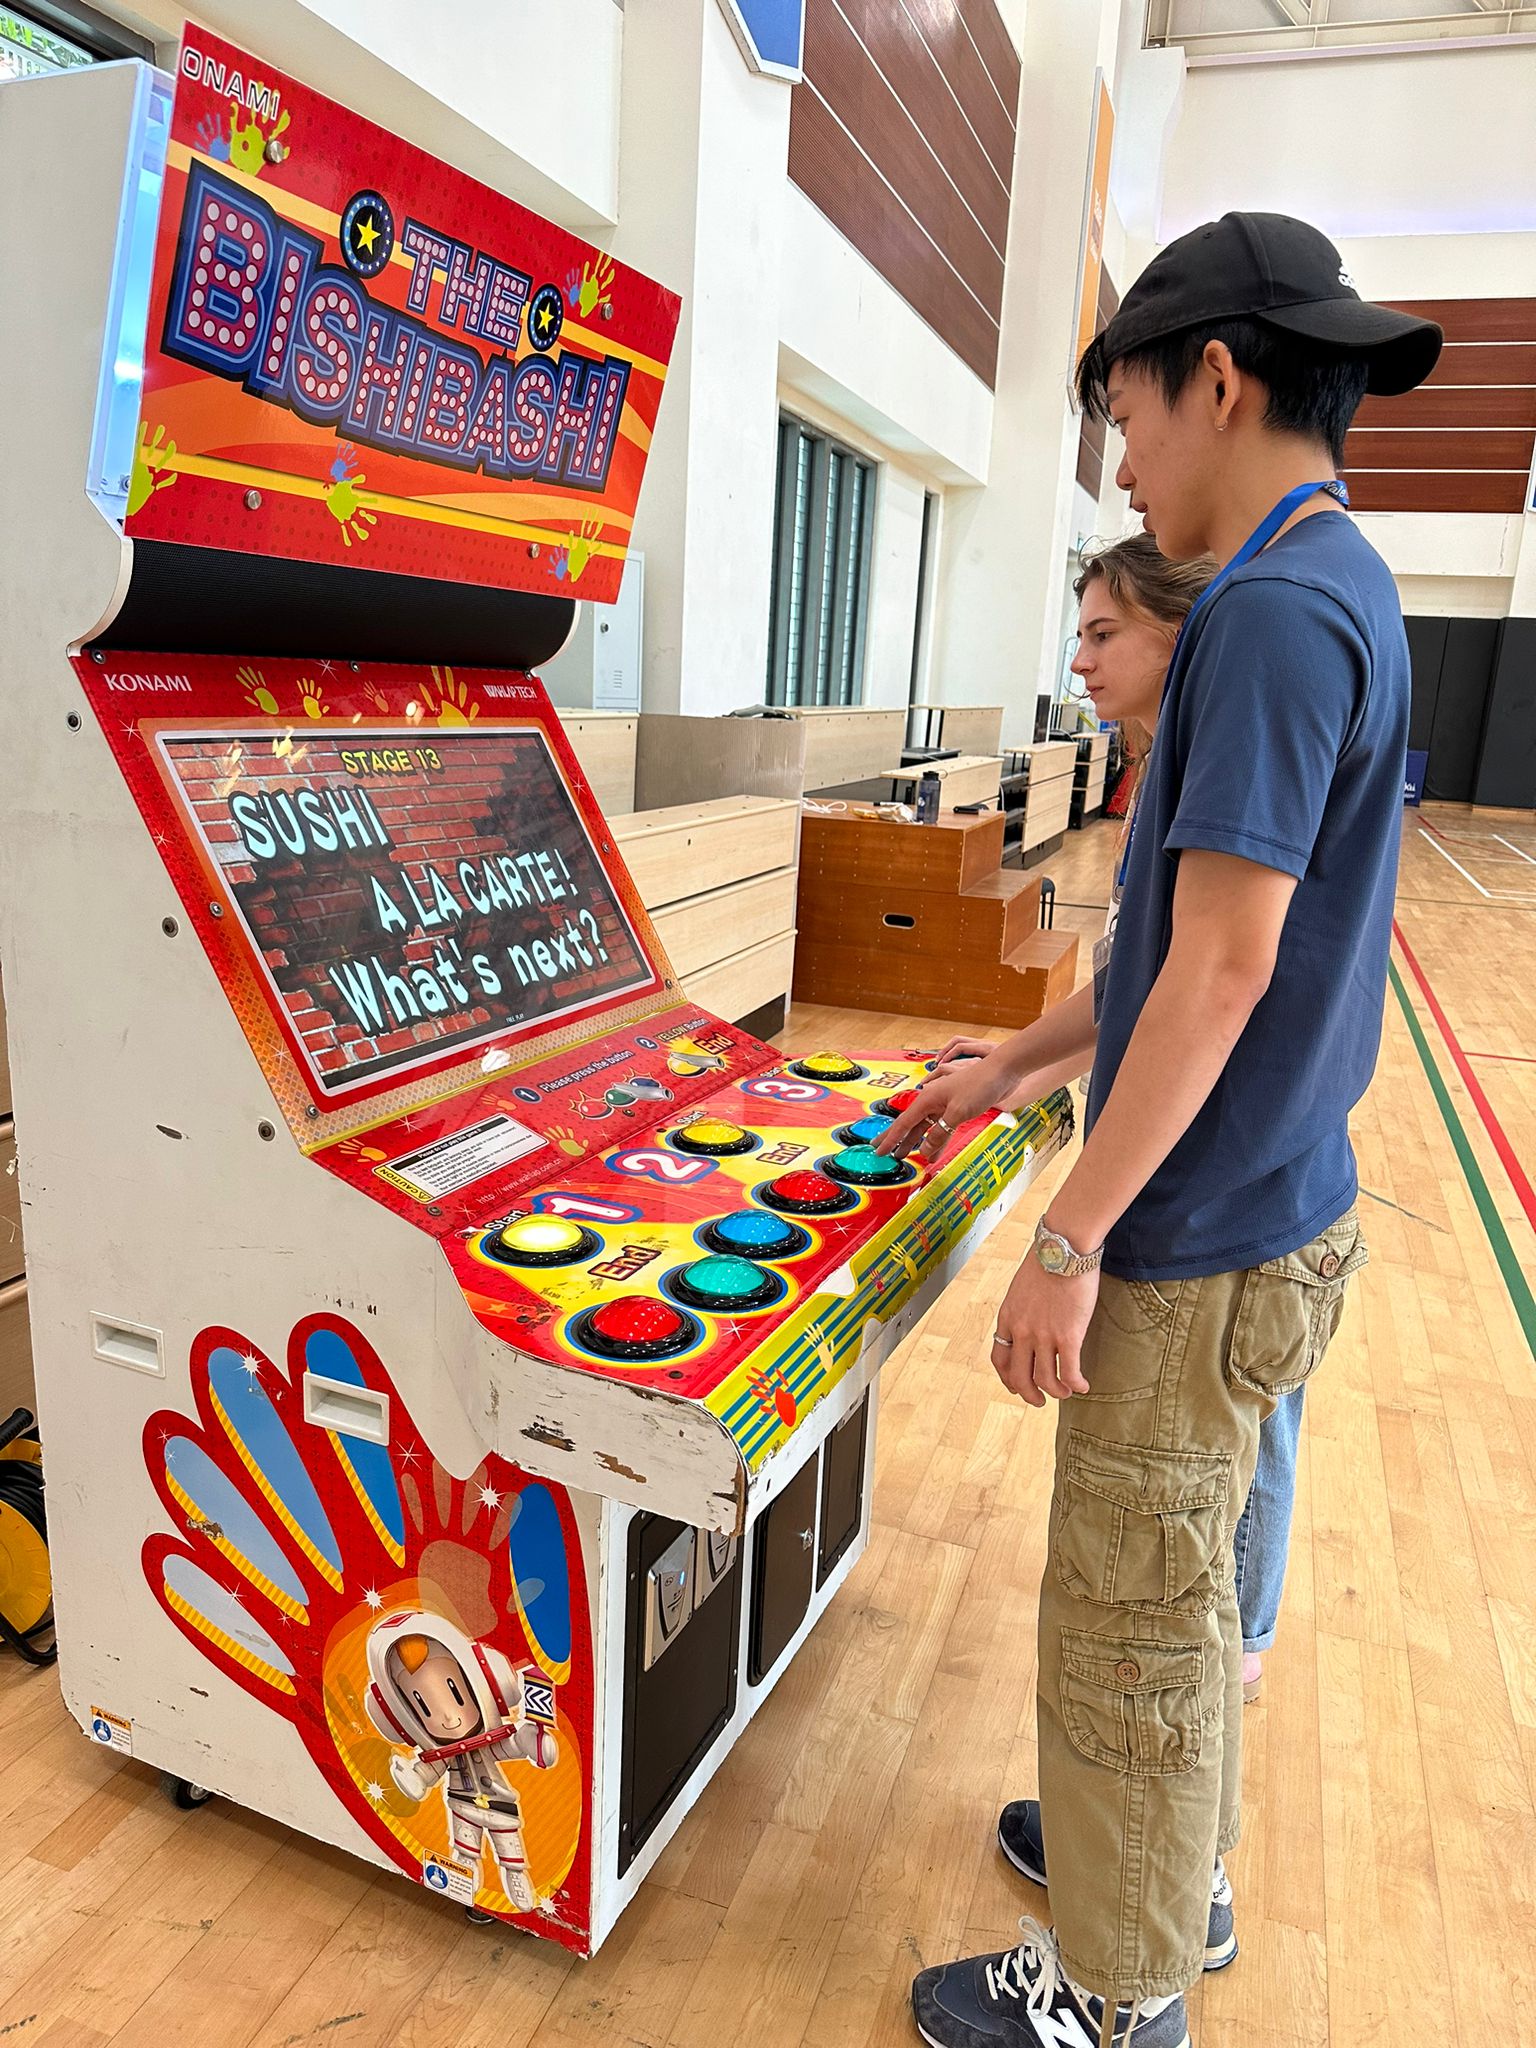 bishibashi arcade game machine for rent